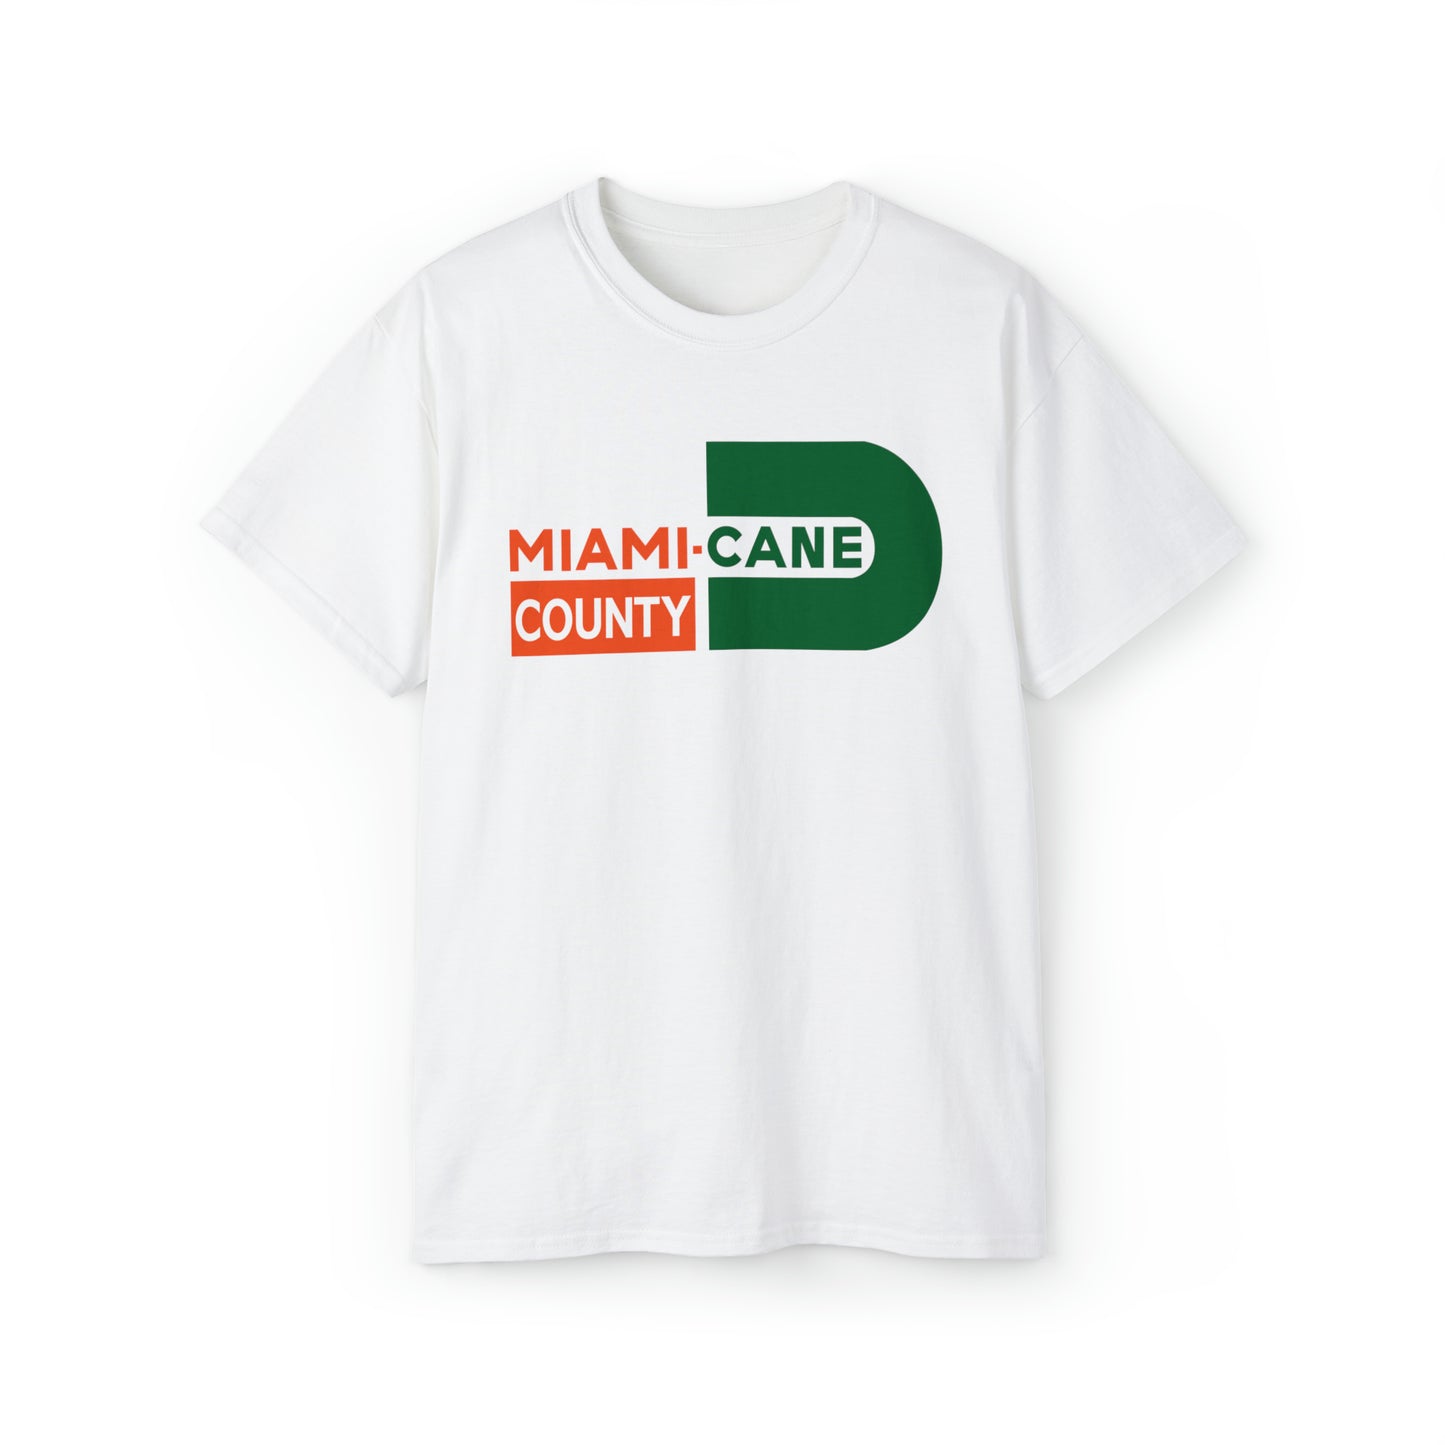 Miami-Cane County™ Shirt